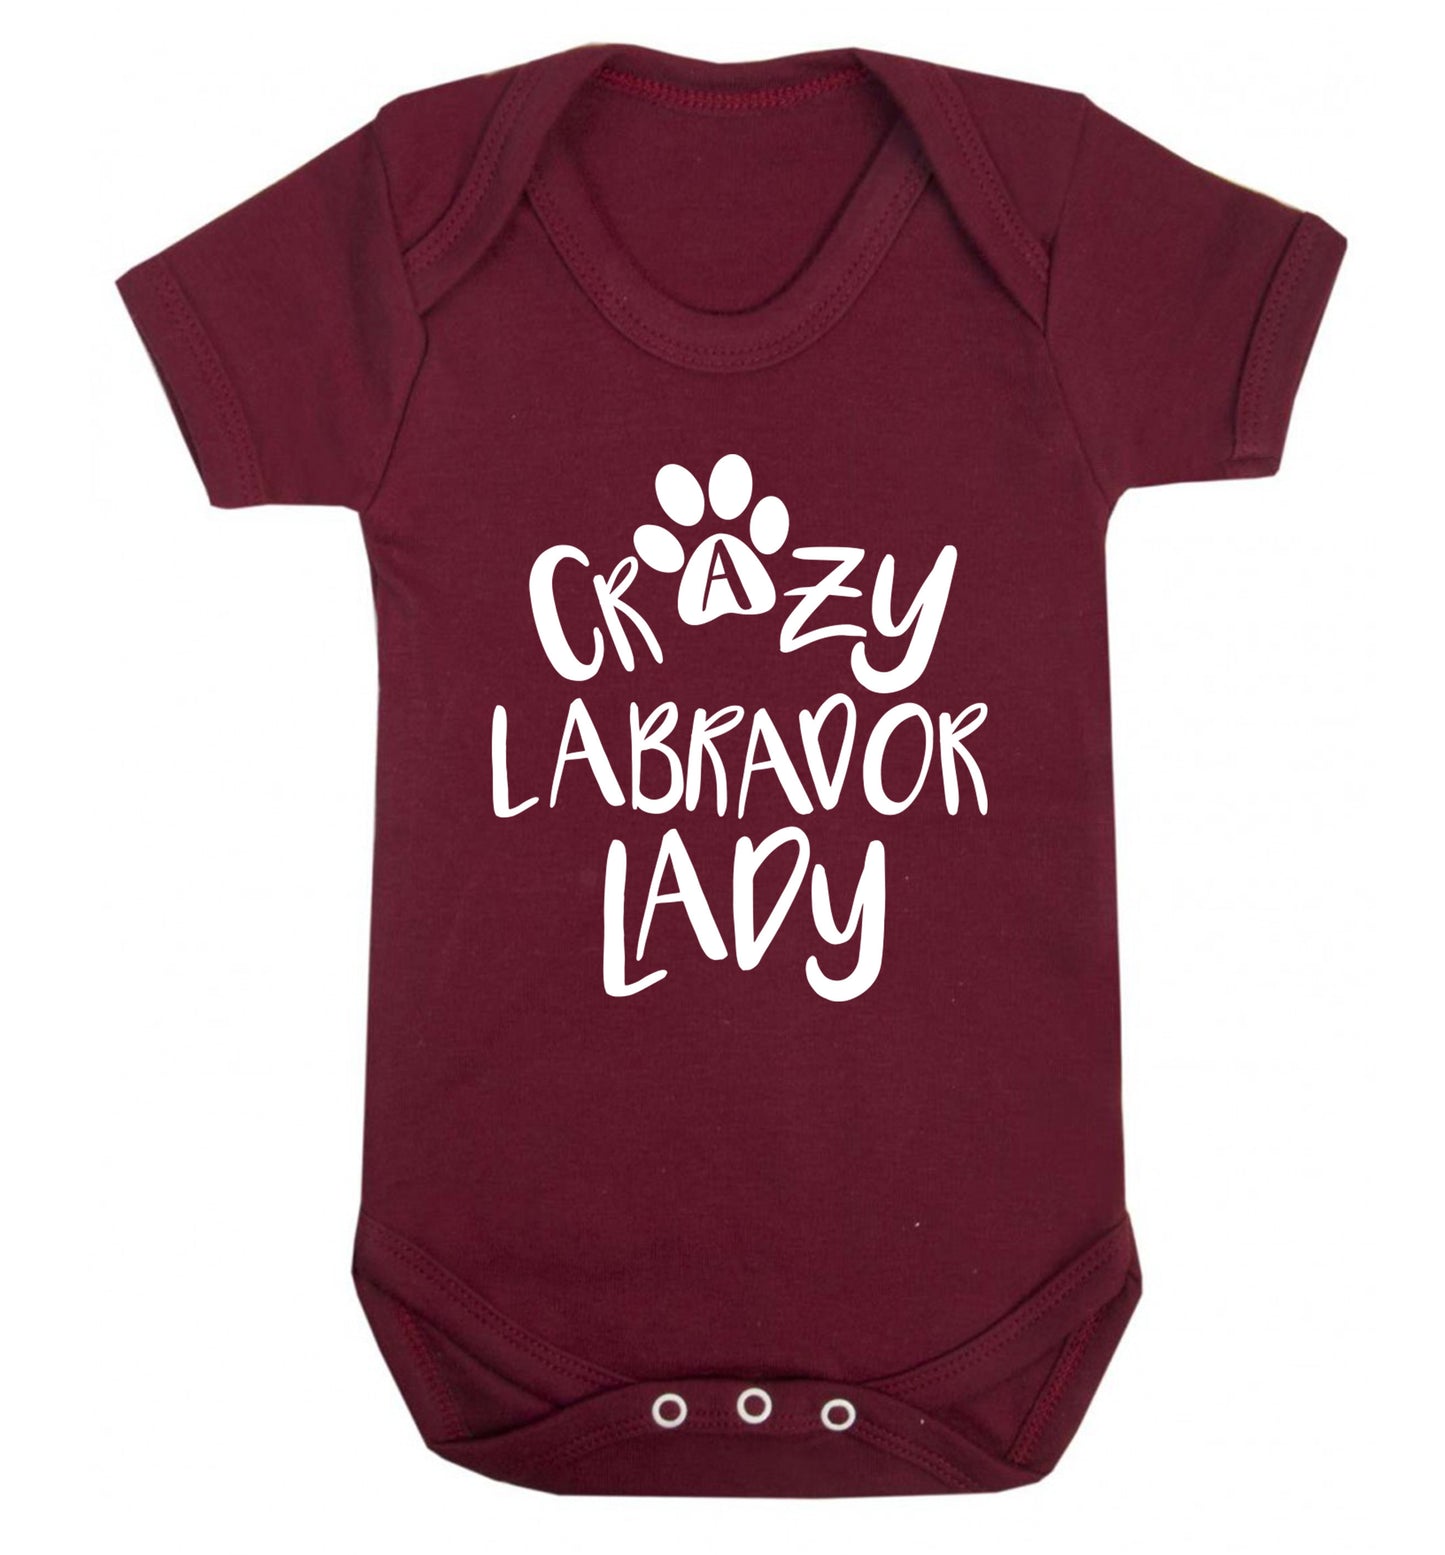 Crazy labrador lady Baby Vest maroon 18-24 months